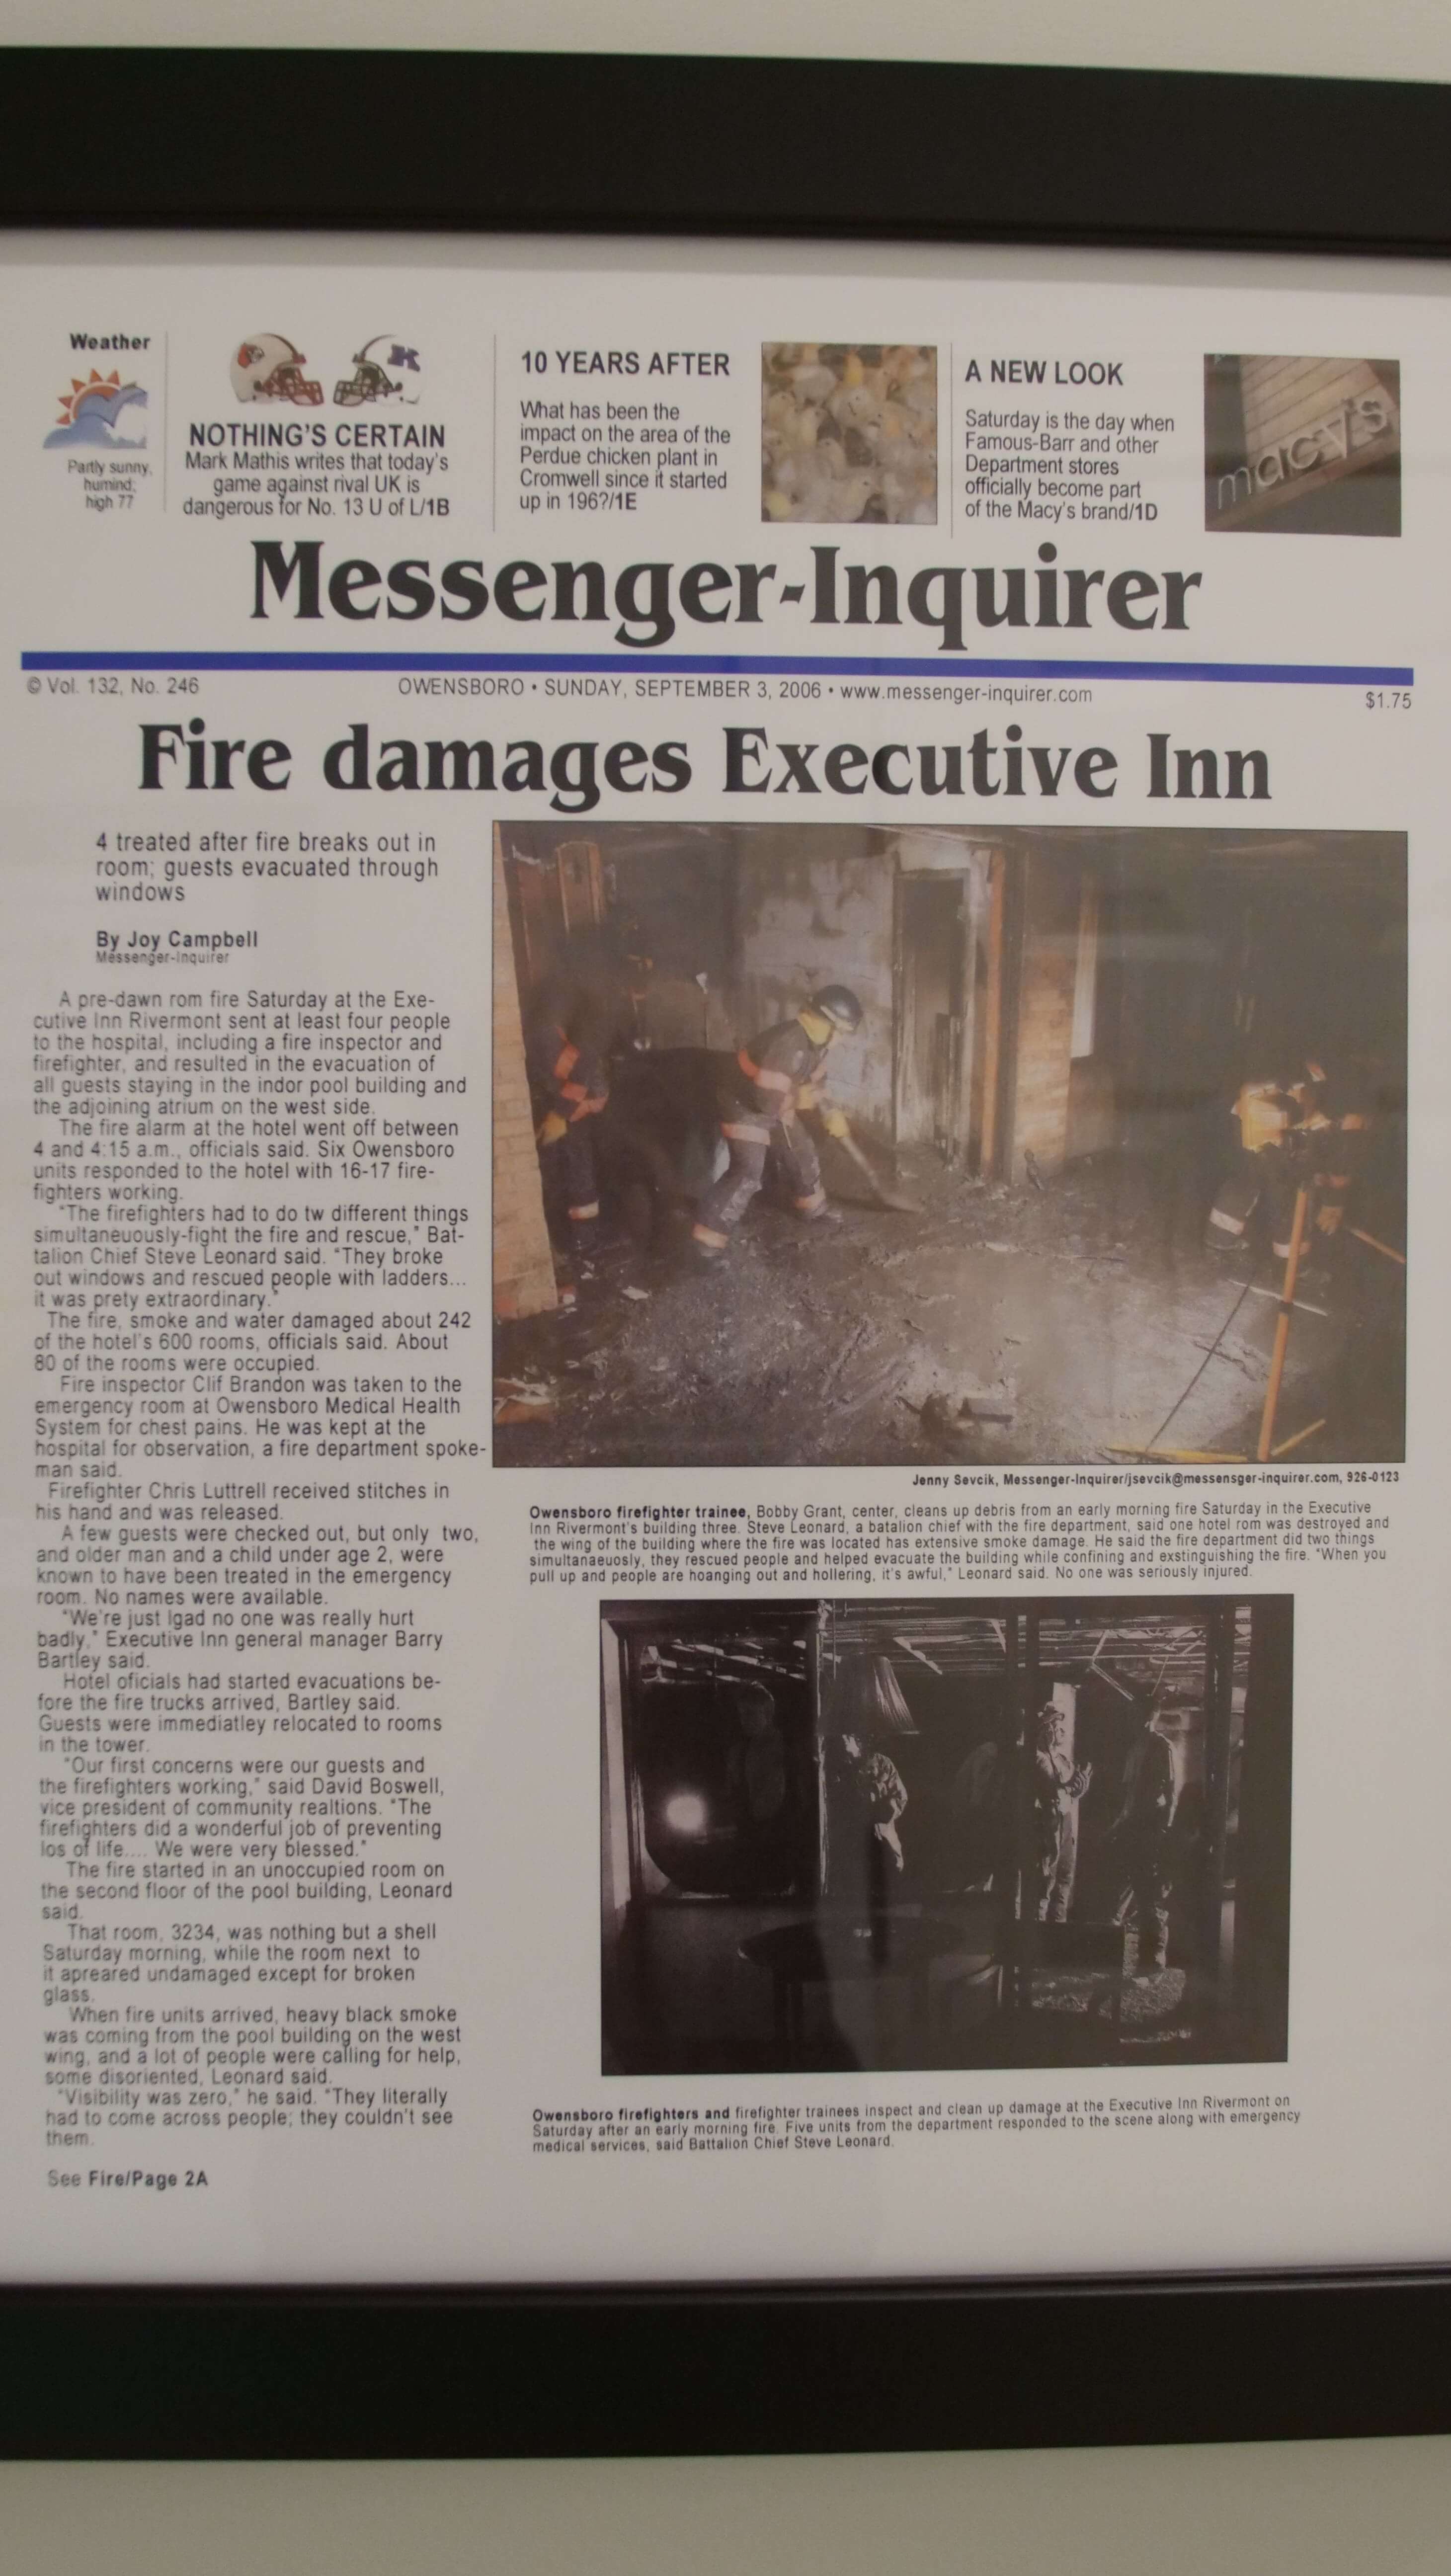 Newspaper showing Executive Inn fire damage